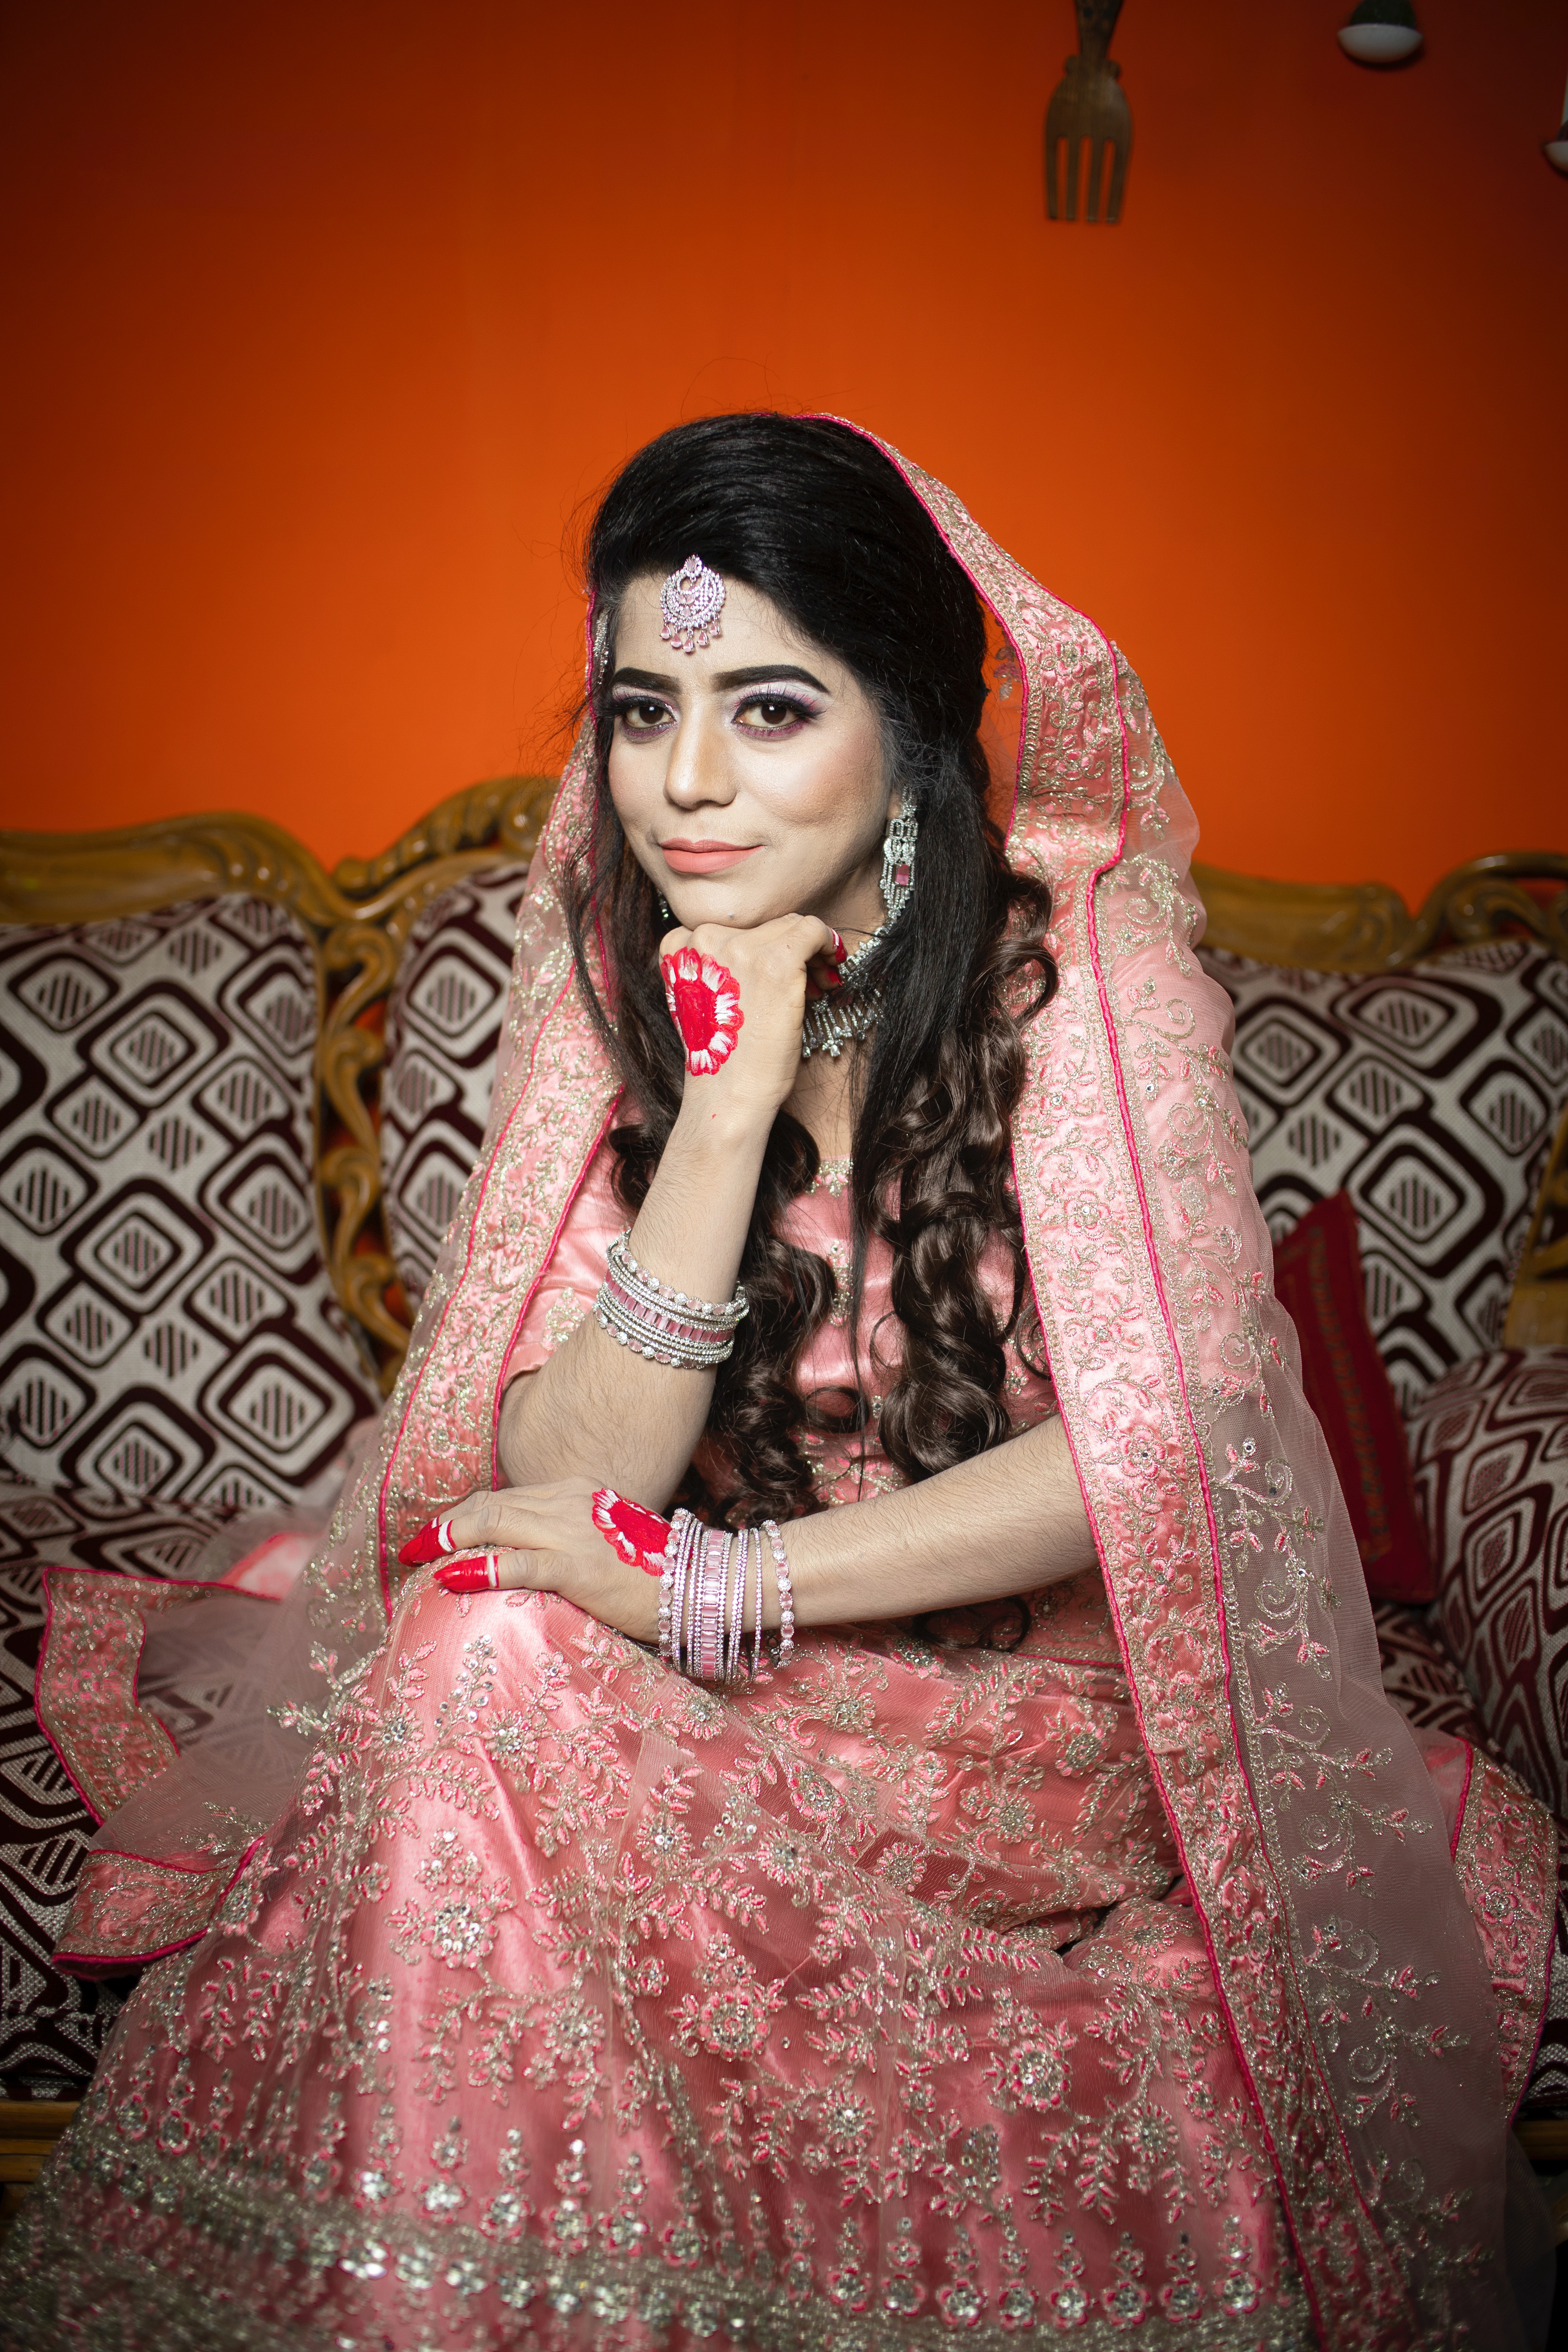 Indian wedding dress photos download the best free indian wedding dress stock photos hd images